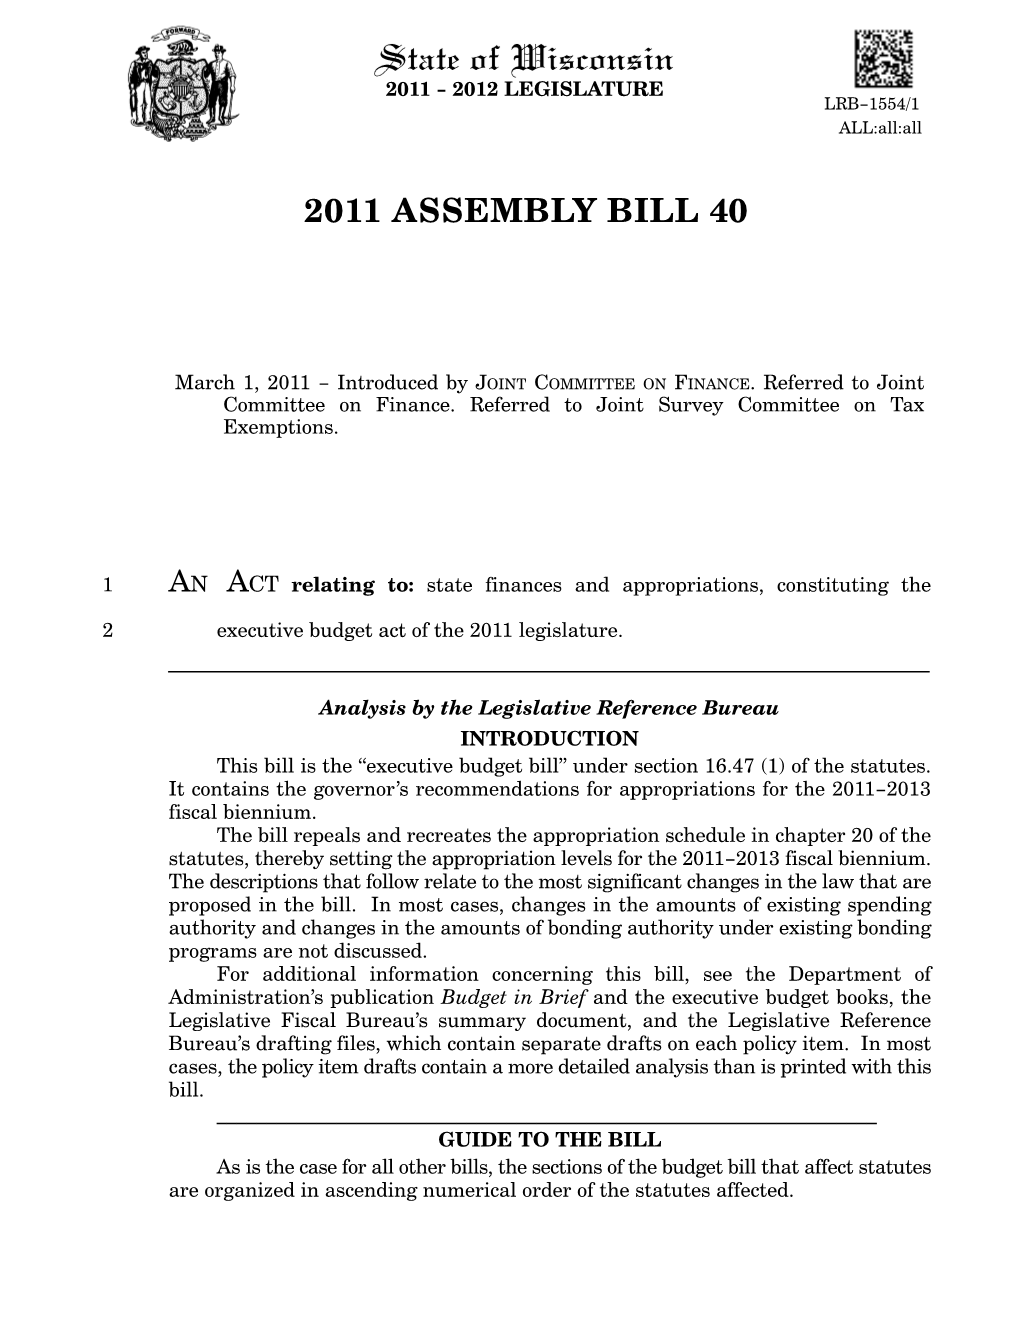 2011 Assembly Bill 40